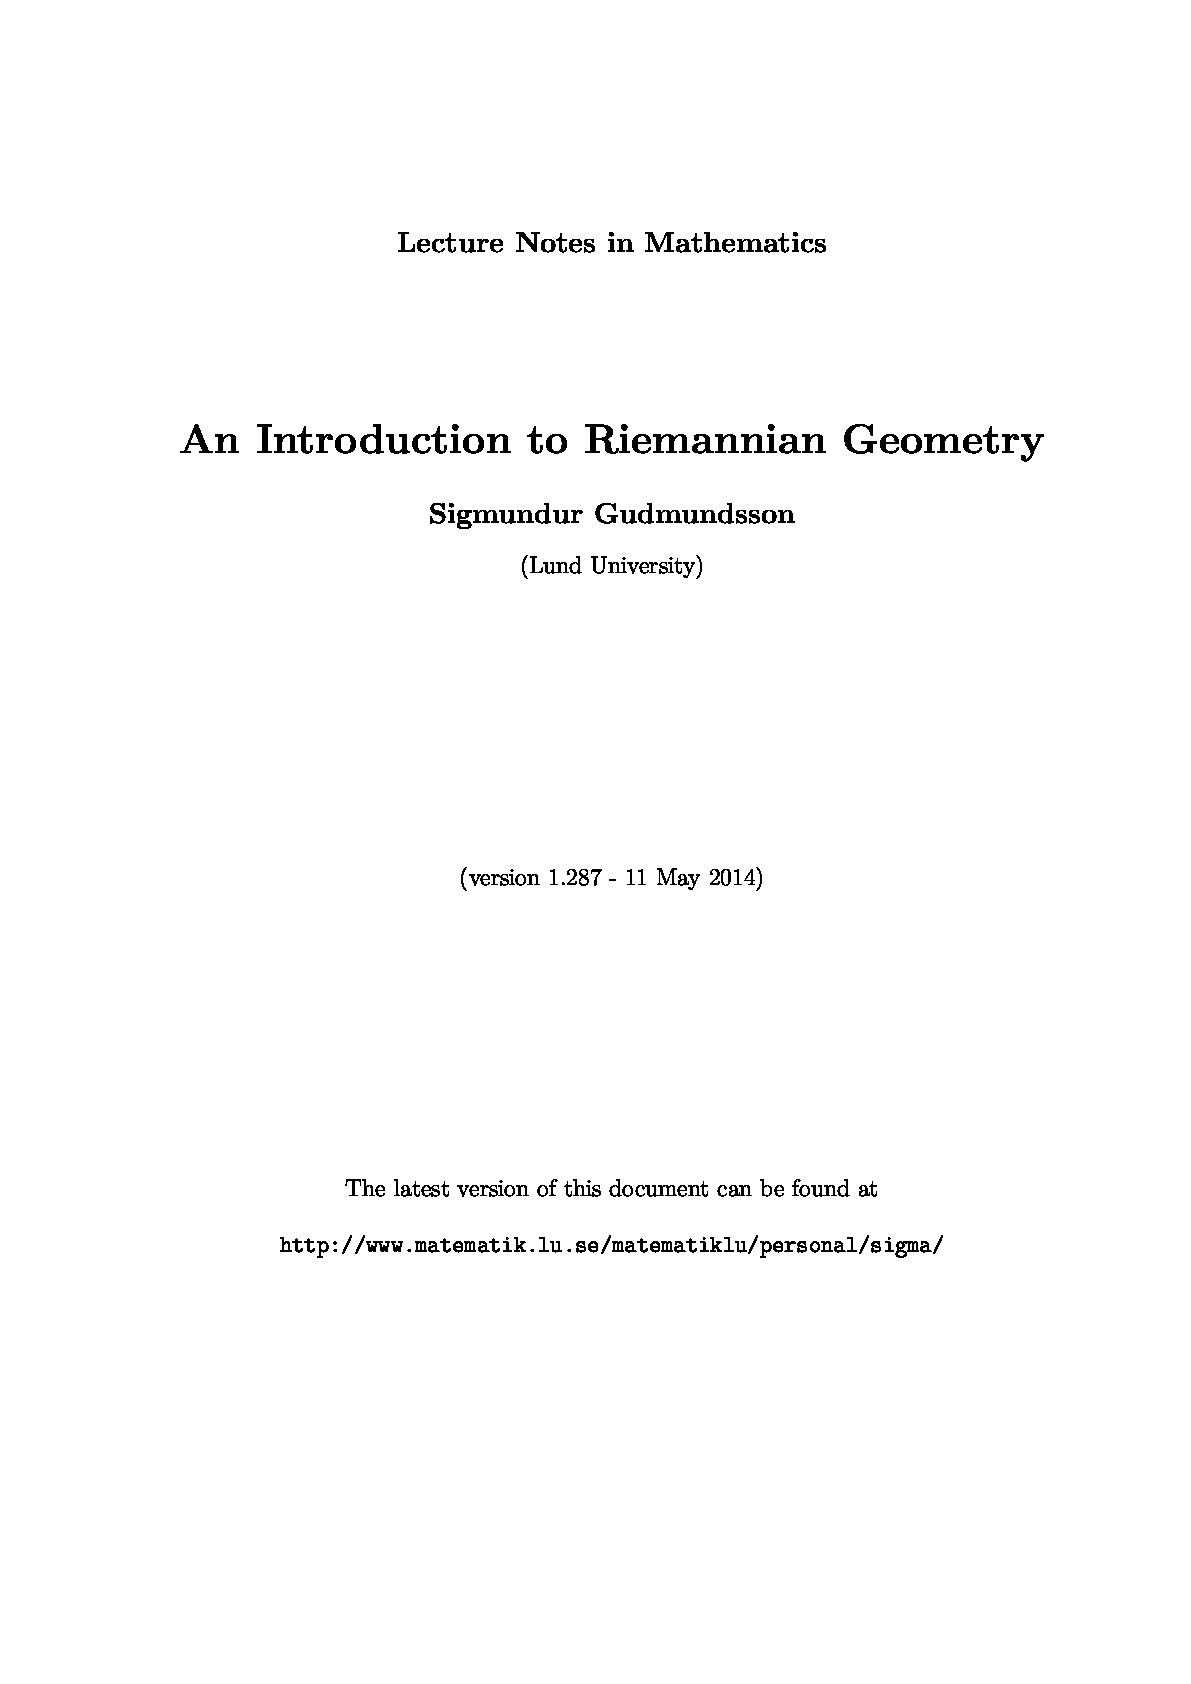 Intro_to_Riemannian_Geometry